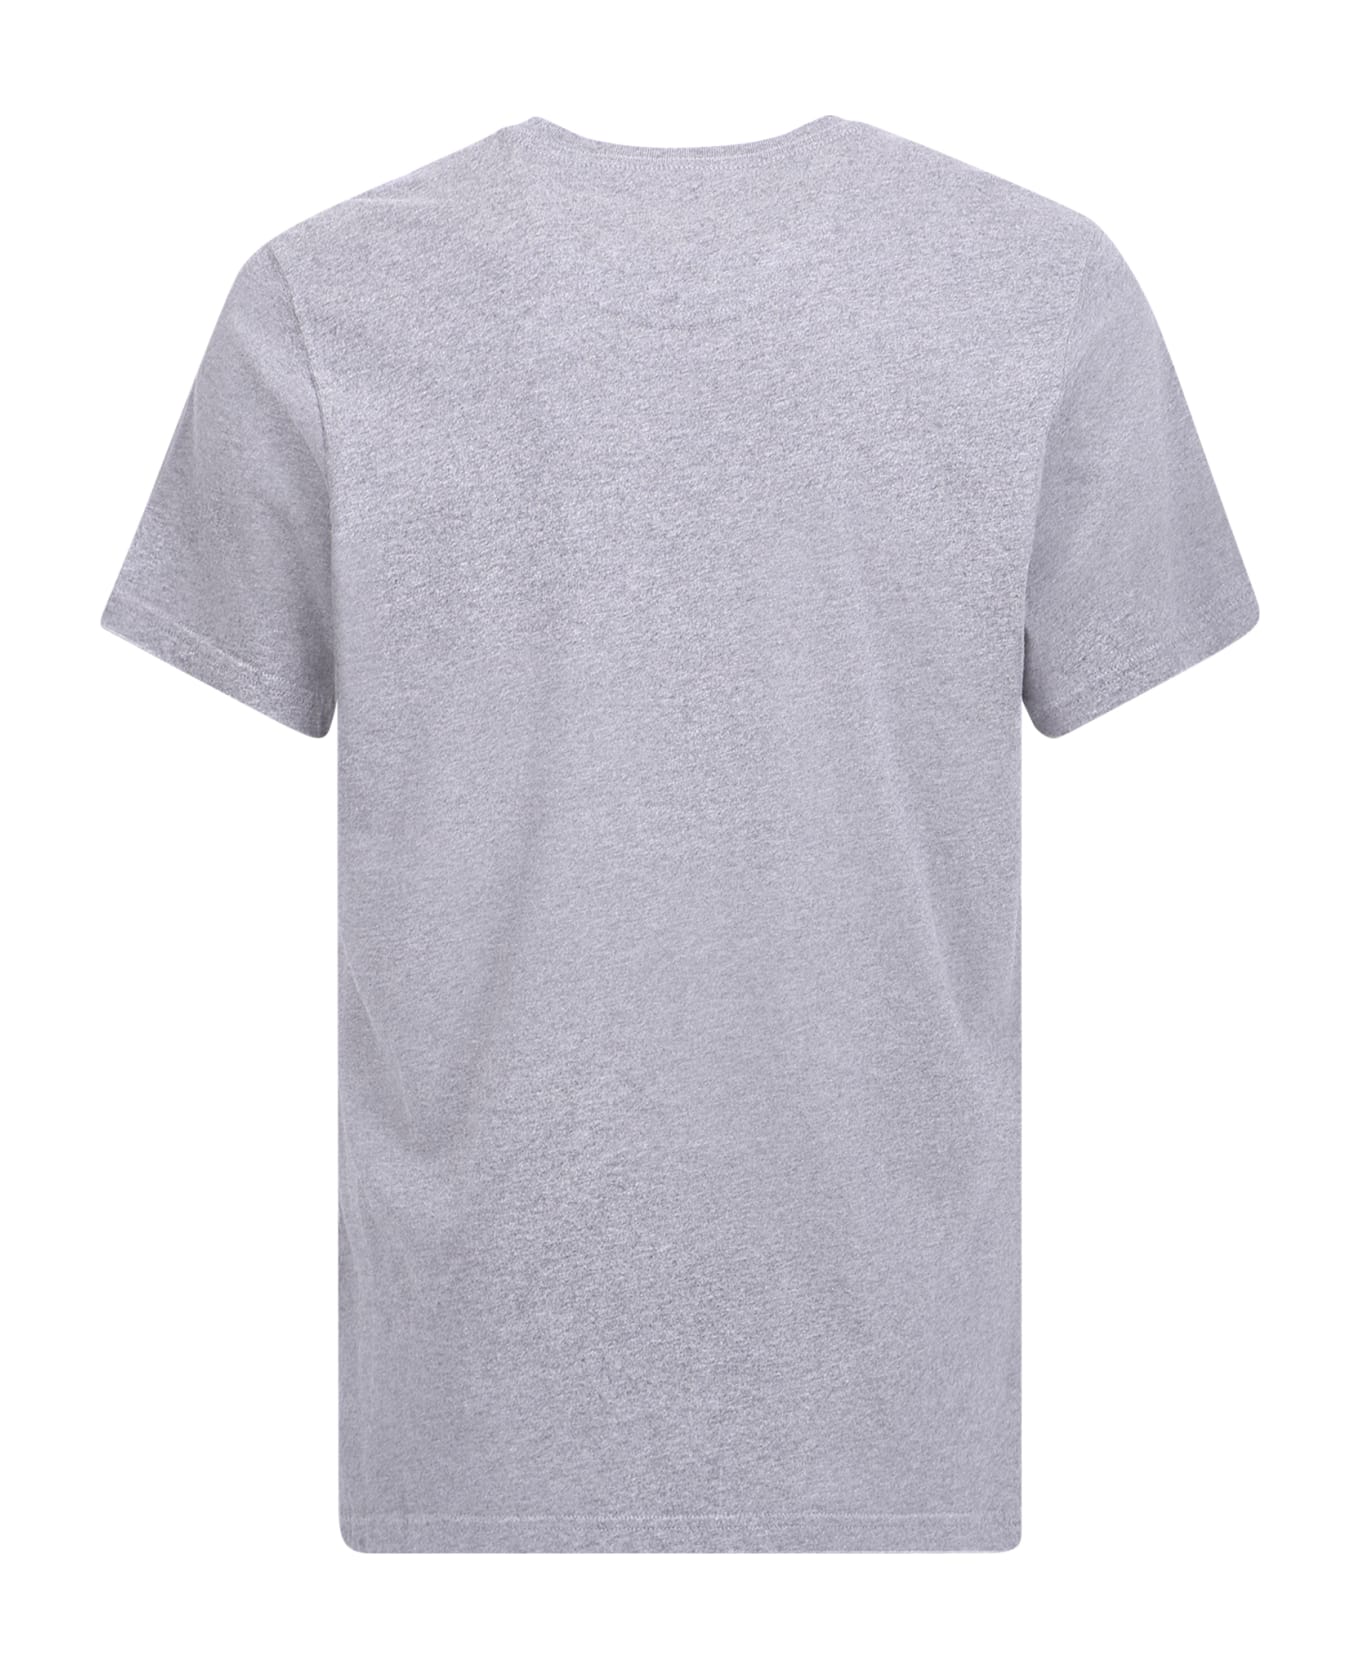 Barbour Logo Print T-shirt - Grey